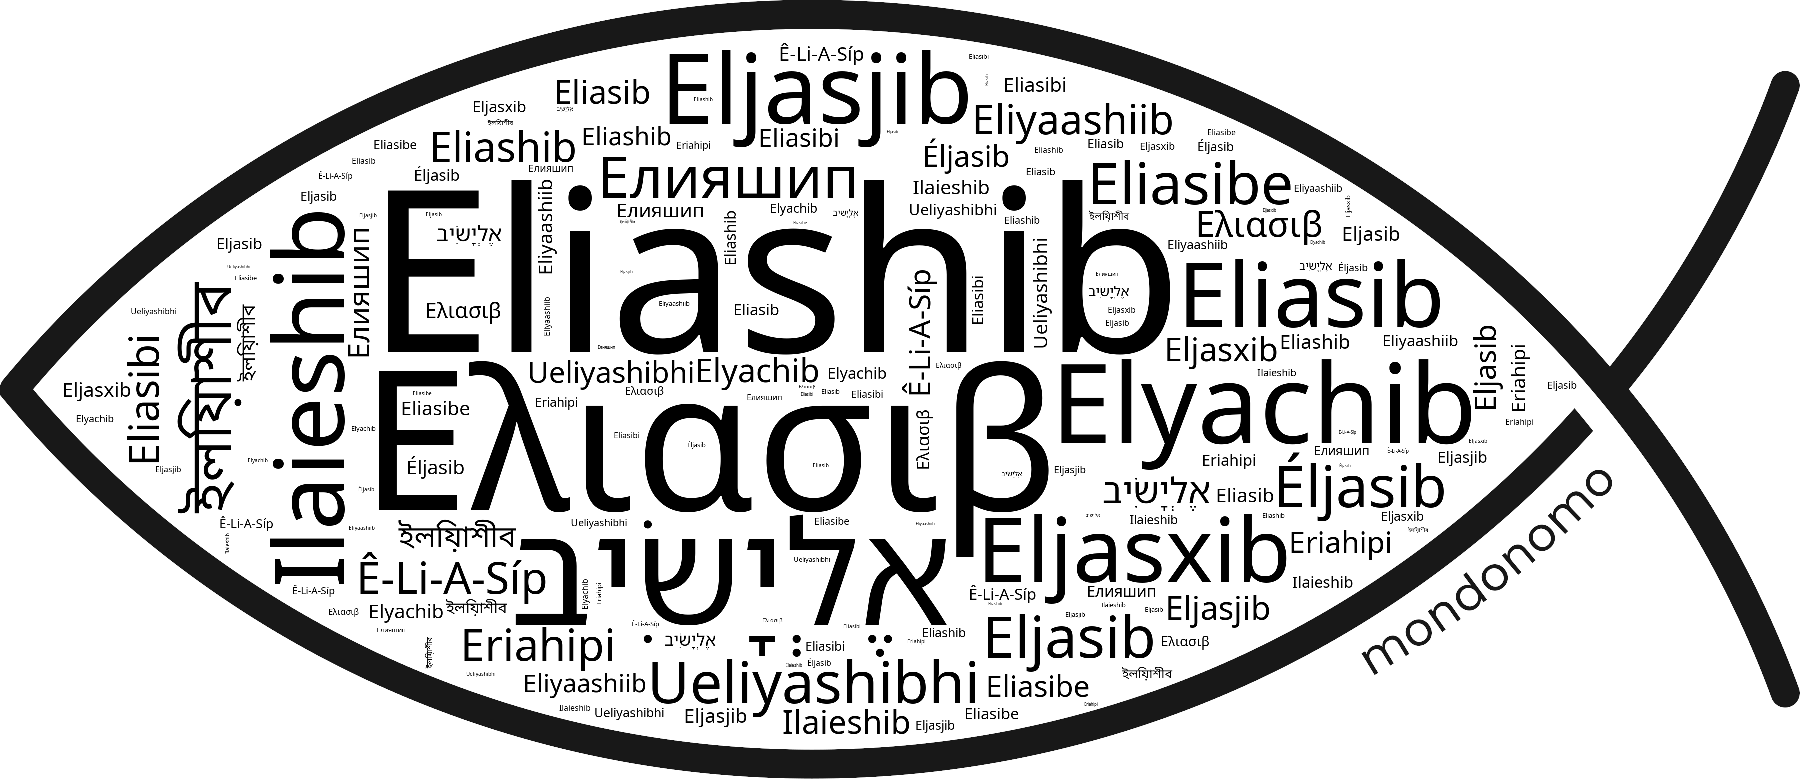 Name Eliashib in the world's Bibles